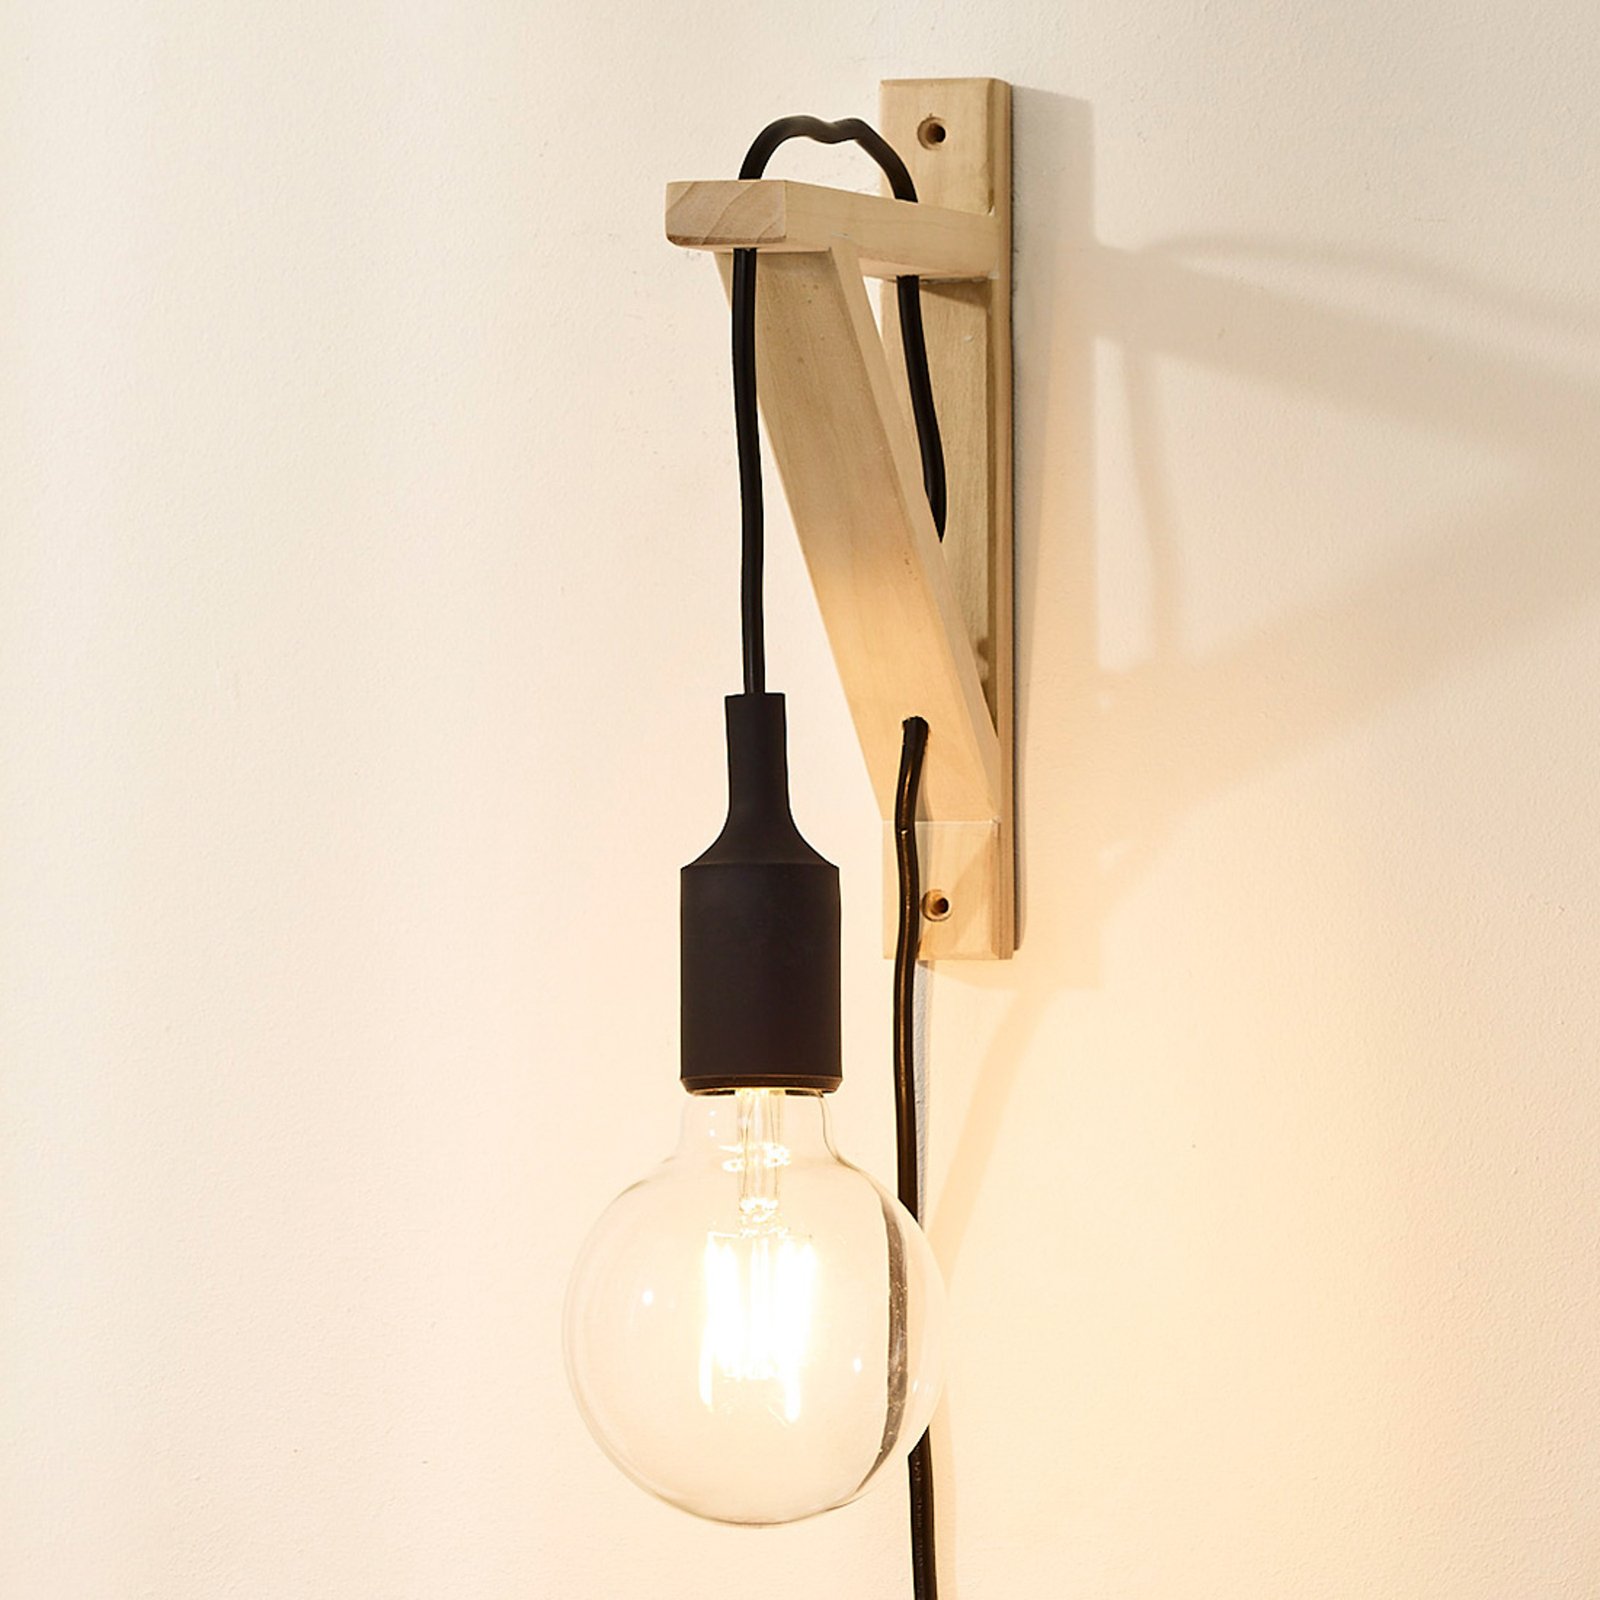 Fix wooden wall light, black socket